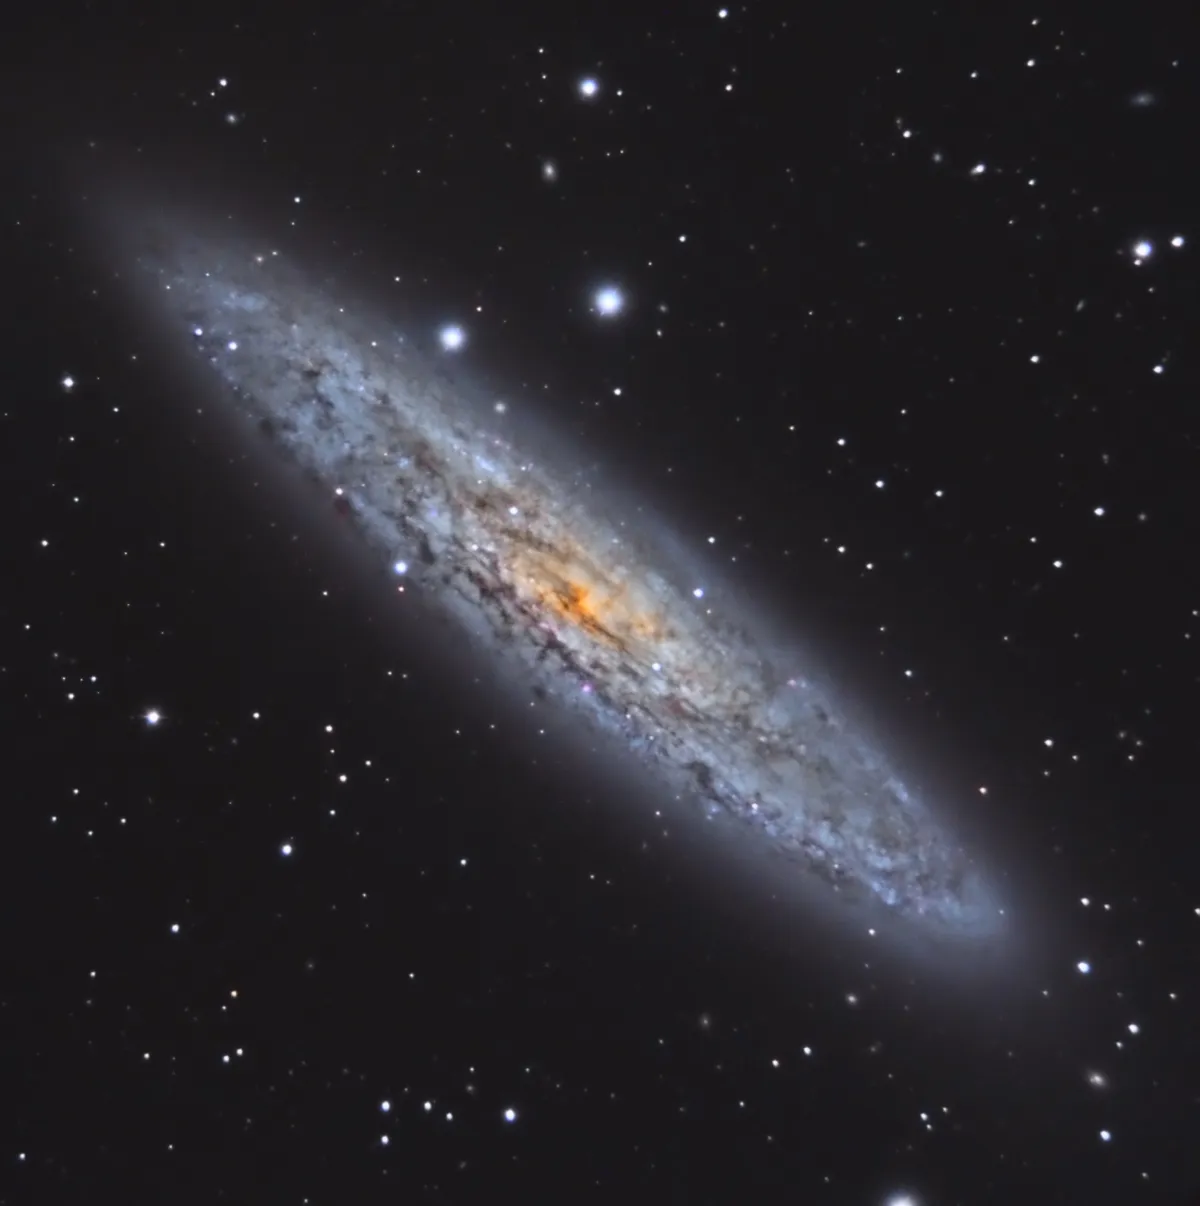 NGC 253 (Sculptor) by David Attié, Abu Dhabi. Equipment: C11 XLT Fastar, focal reducer 0,63x, CCD Moravian G2-4000 (internal filter wheel), Skyméca Off Axis Guider Skytrack, LodestarX2, Az-Eq6, Baader LRGB filters.